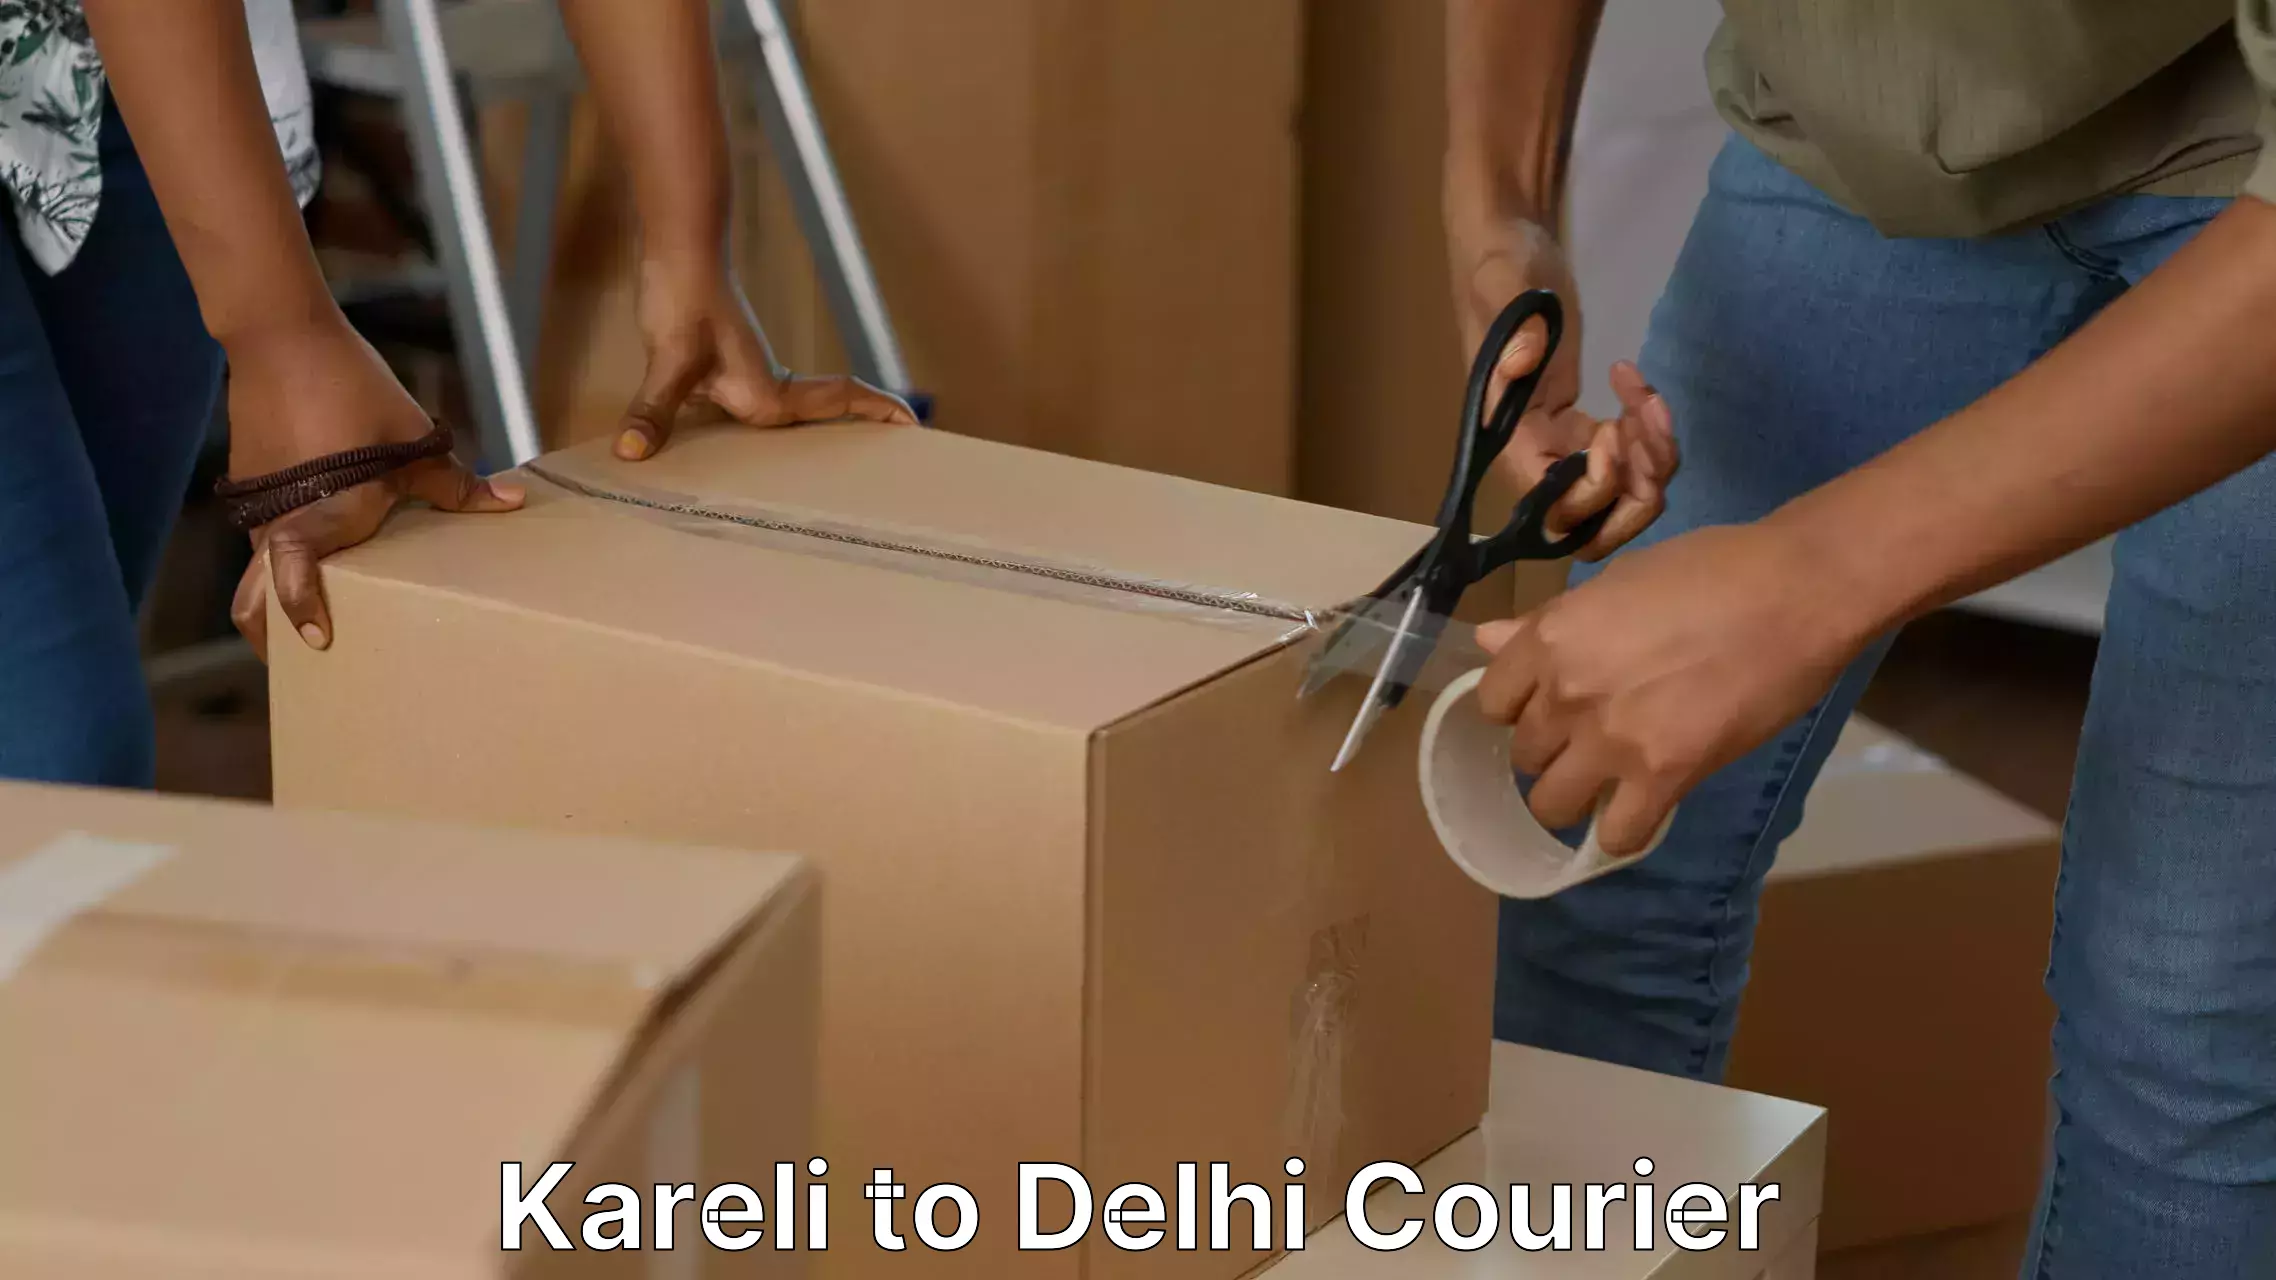 Professional moving company Kareli to Delhi